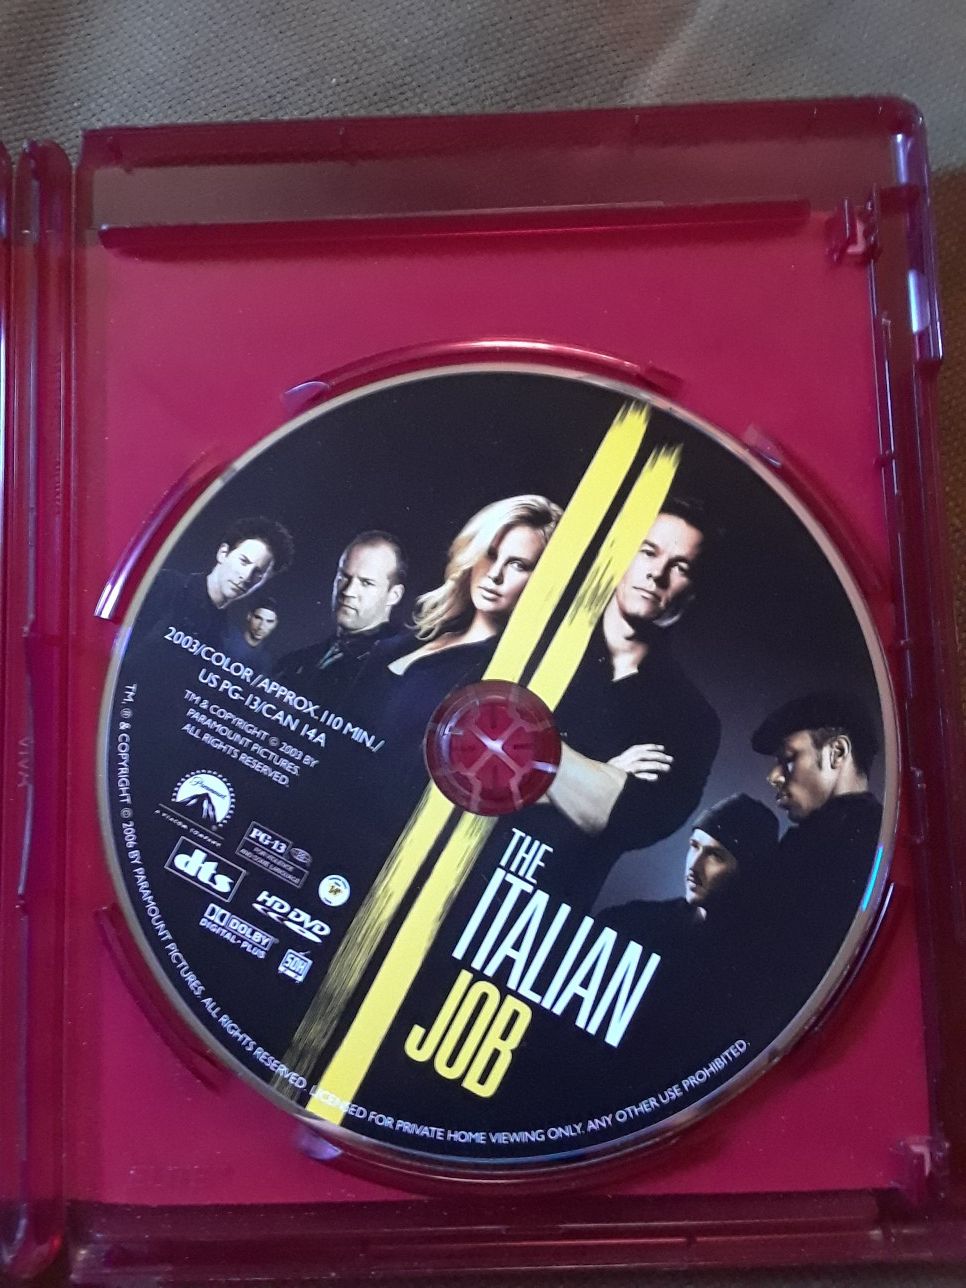 DVD in quality HD "The Italian Job" movie